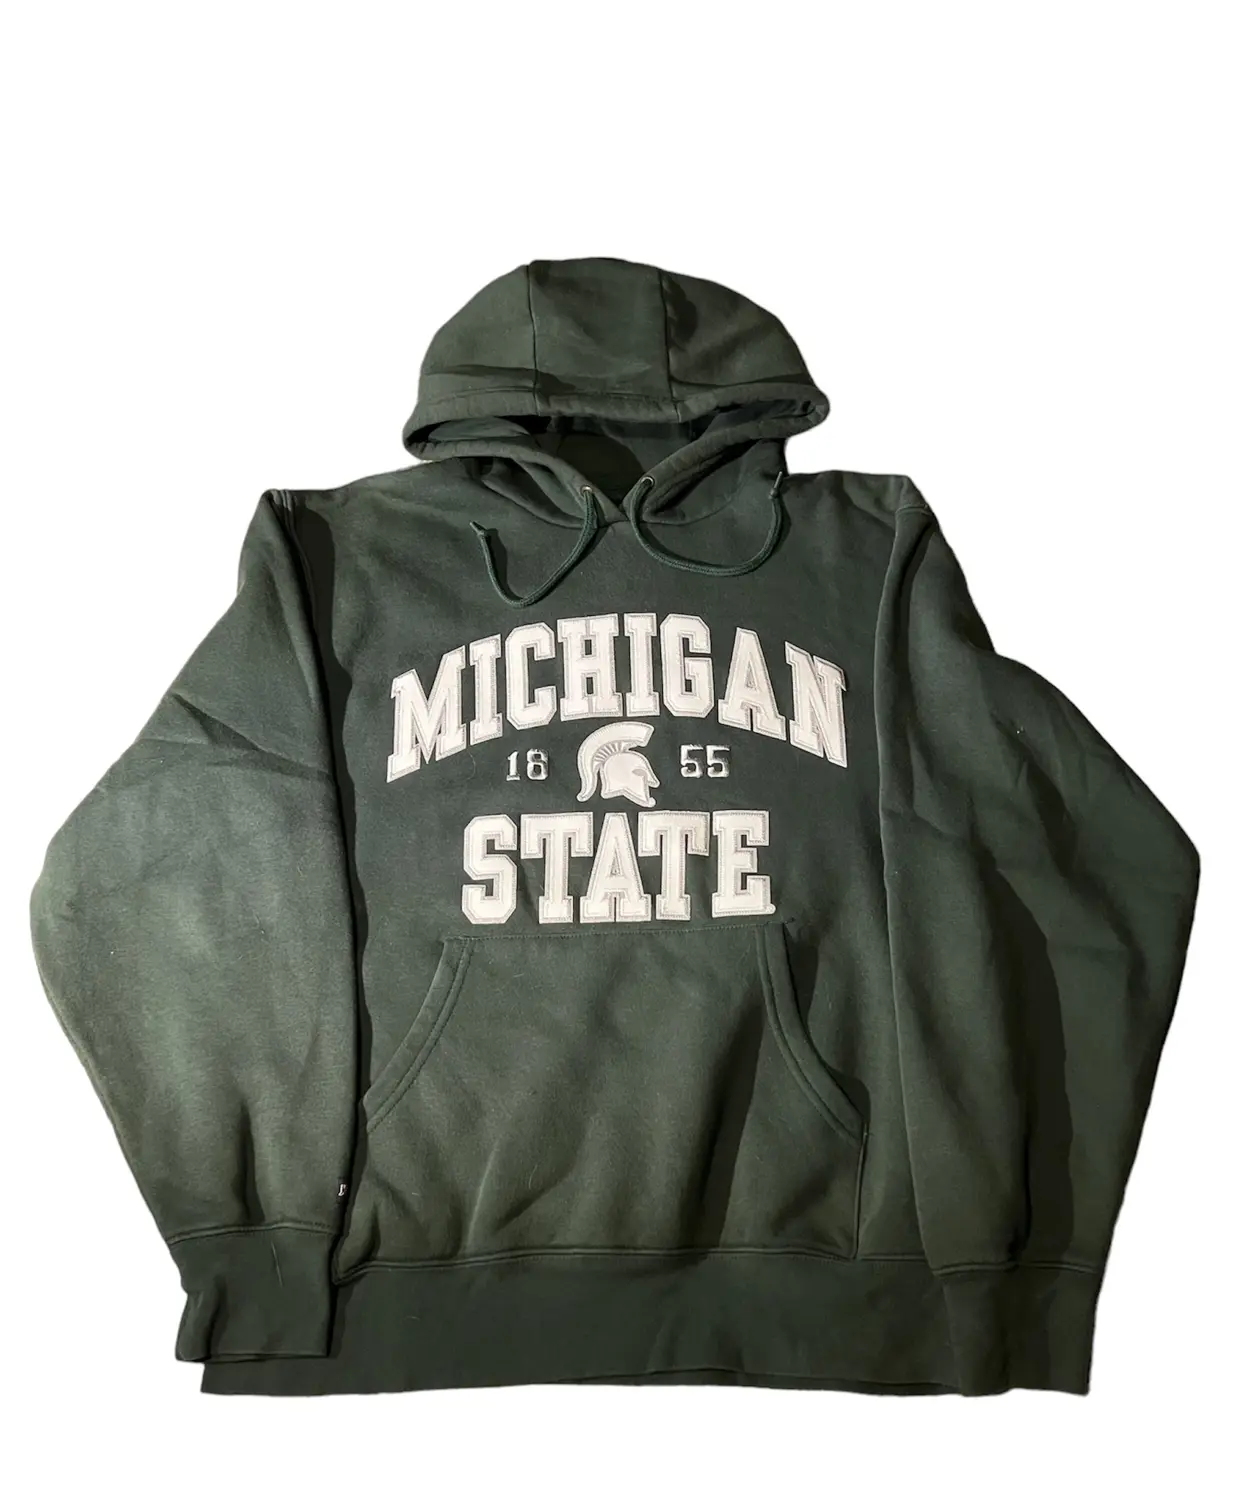 Michigan State stitched hoodie